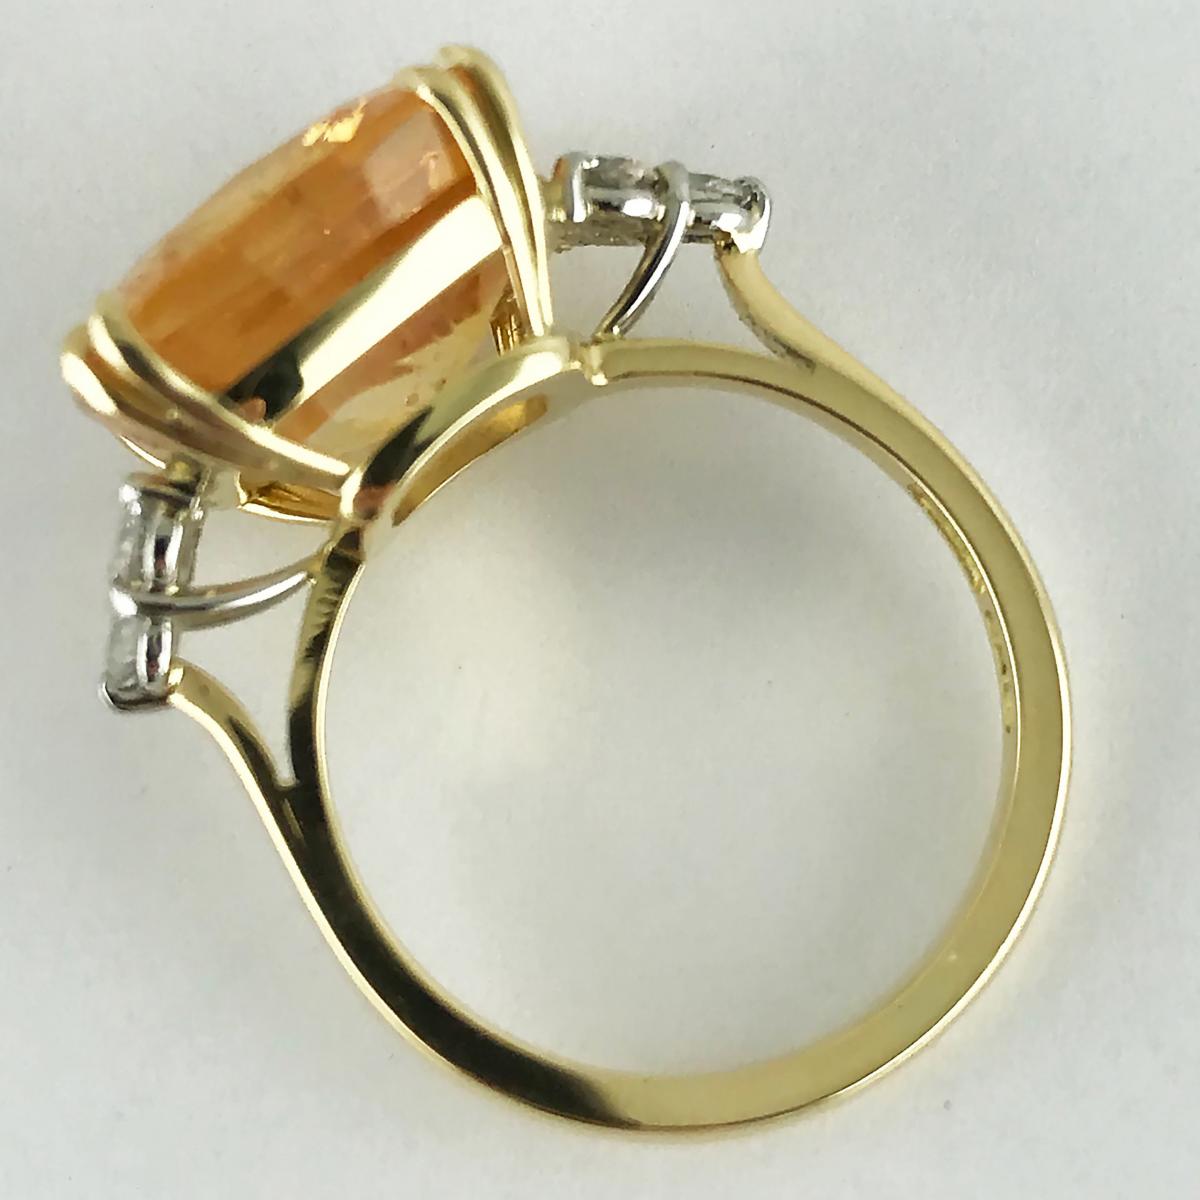 13.5 Carat Cushion Cut Certified Untreated Orange Sapphire Ring